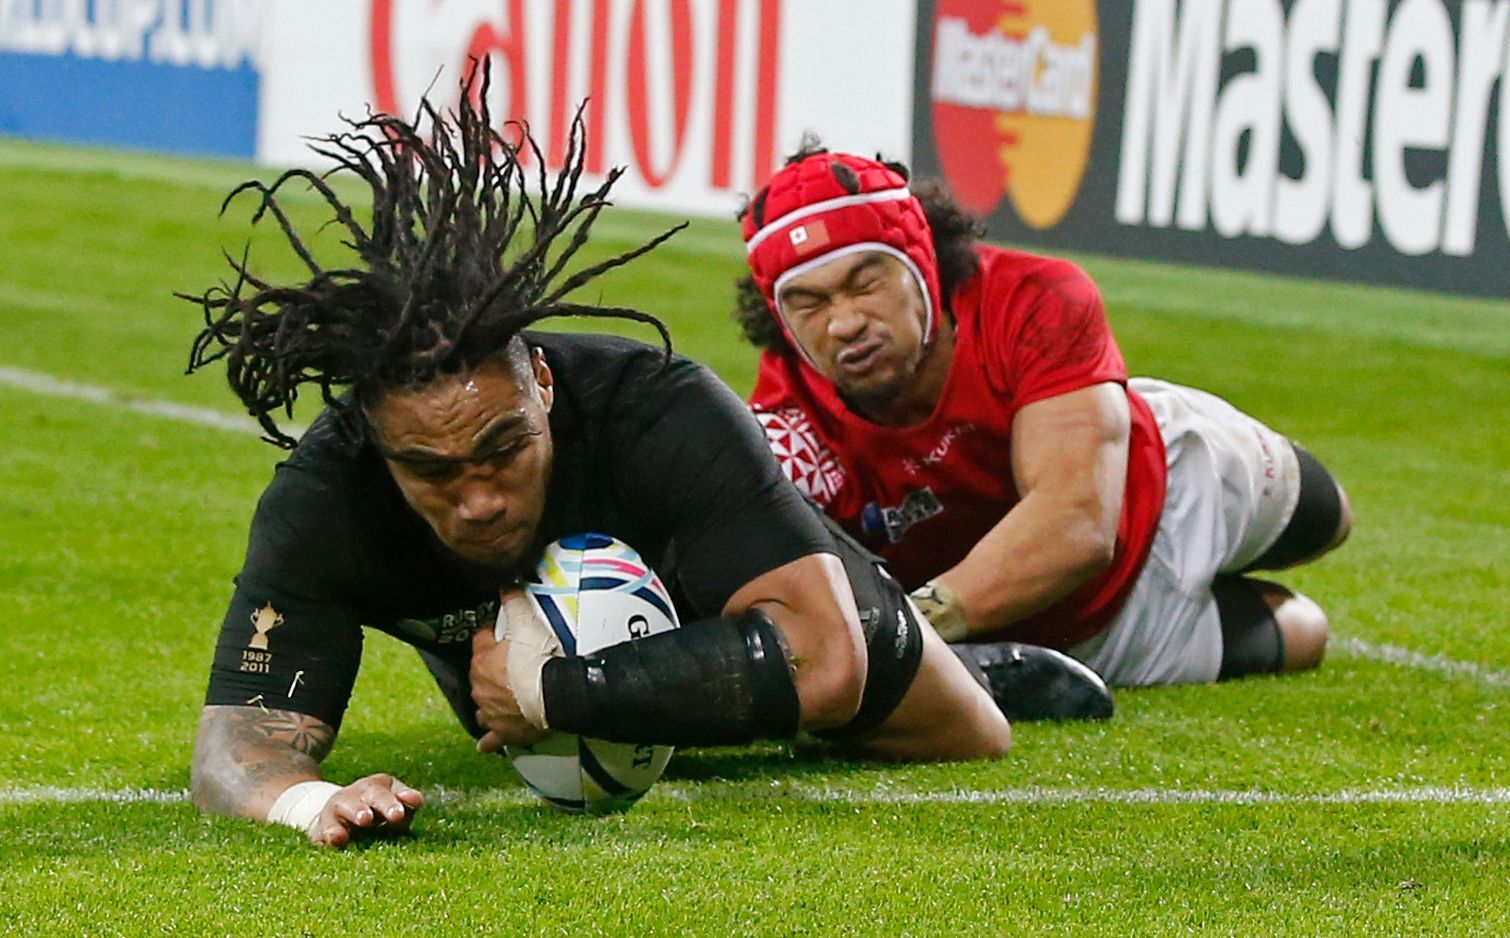 MS v ragby 2015: Nový Zéland vs. Tonga: Ma'a Nonu